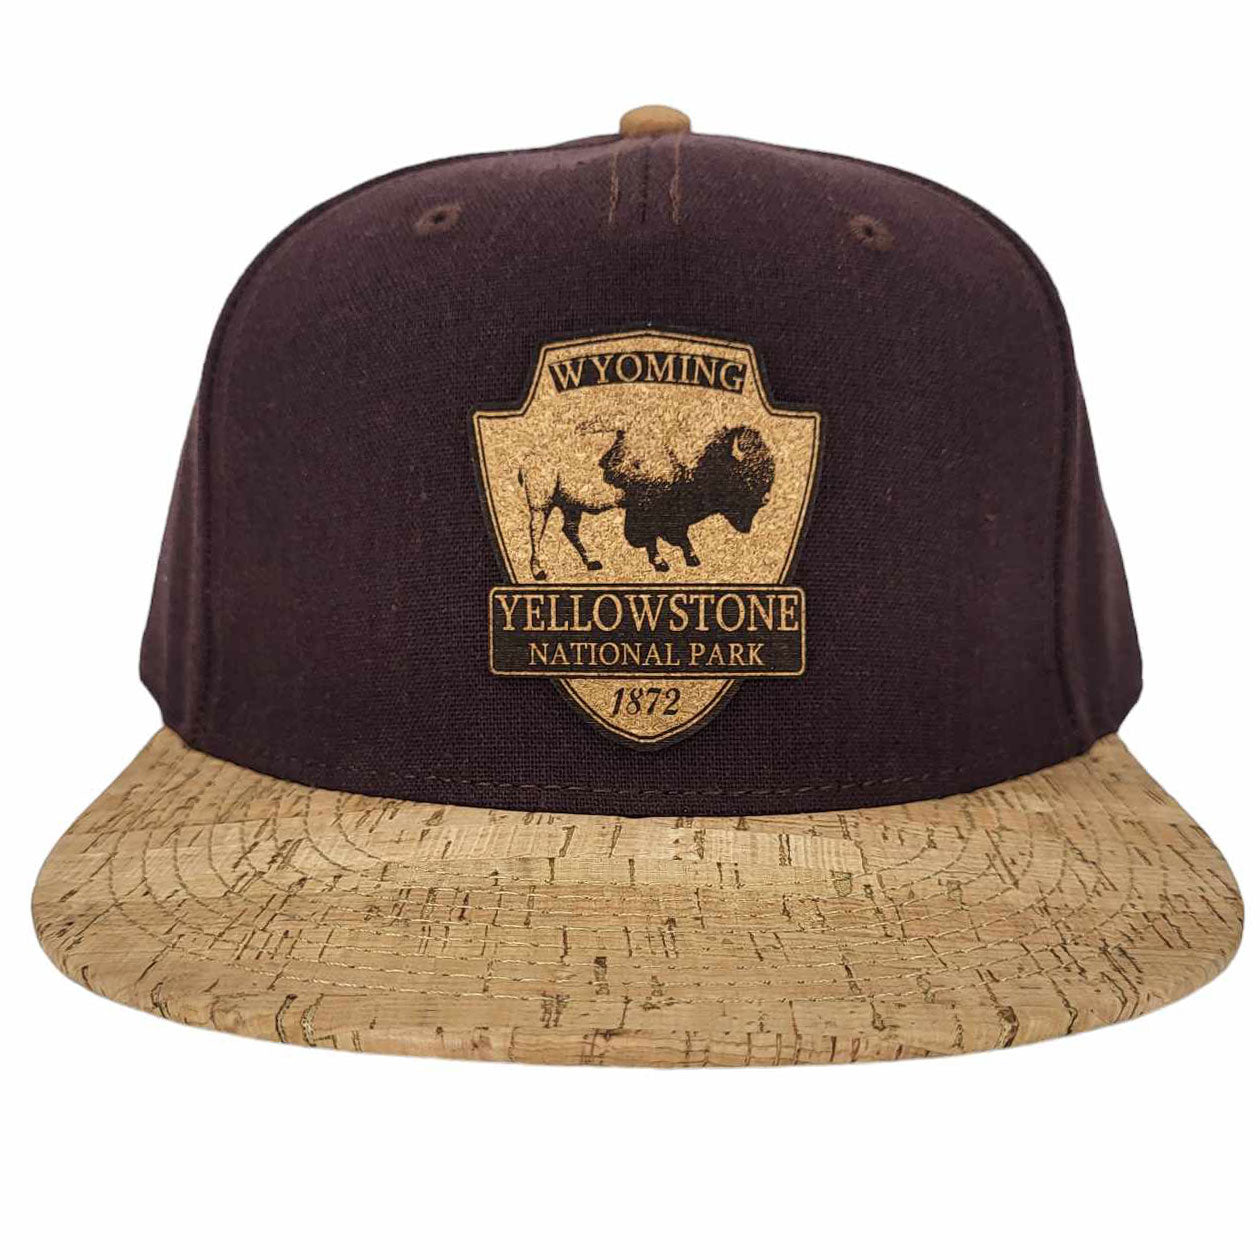 Yellowstone National Park Cork Hat